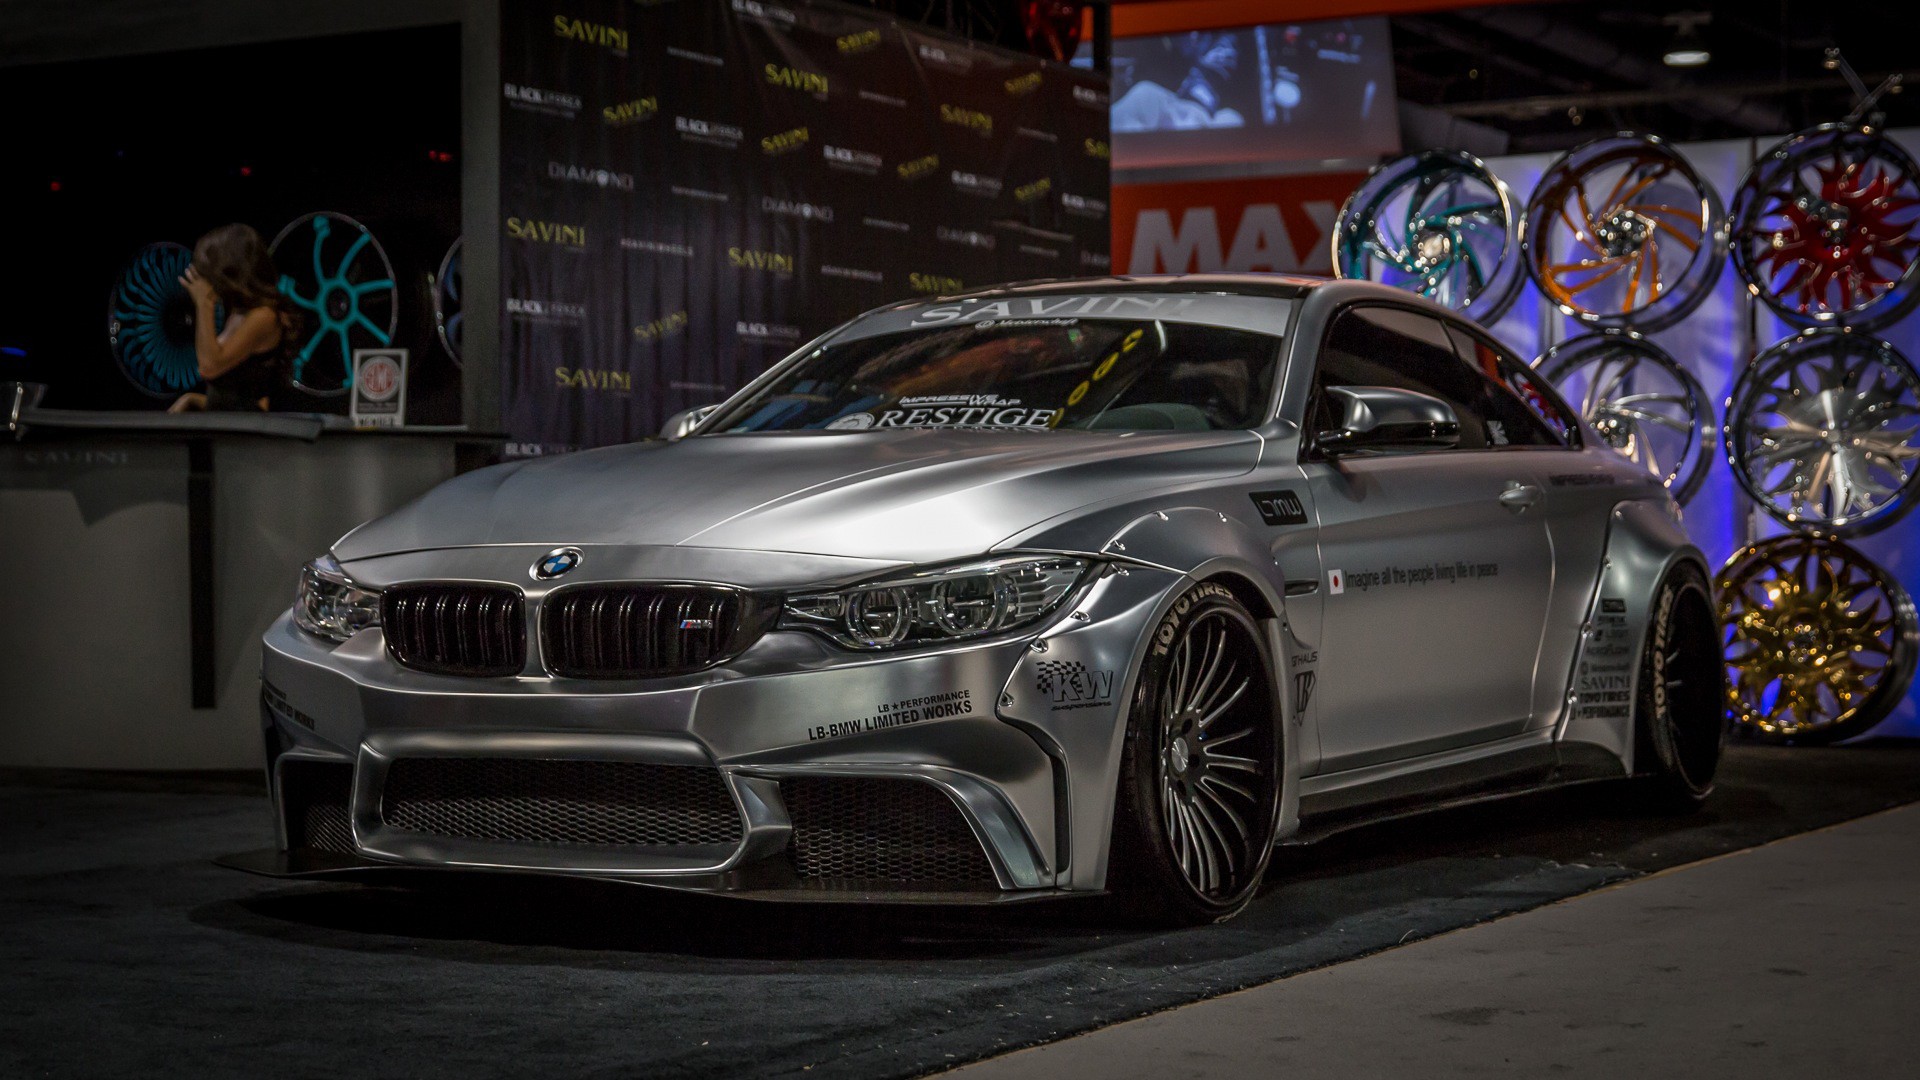 Wallpaper BMW M4, silver luxury car